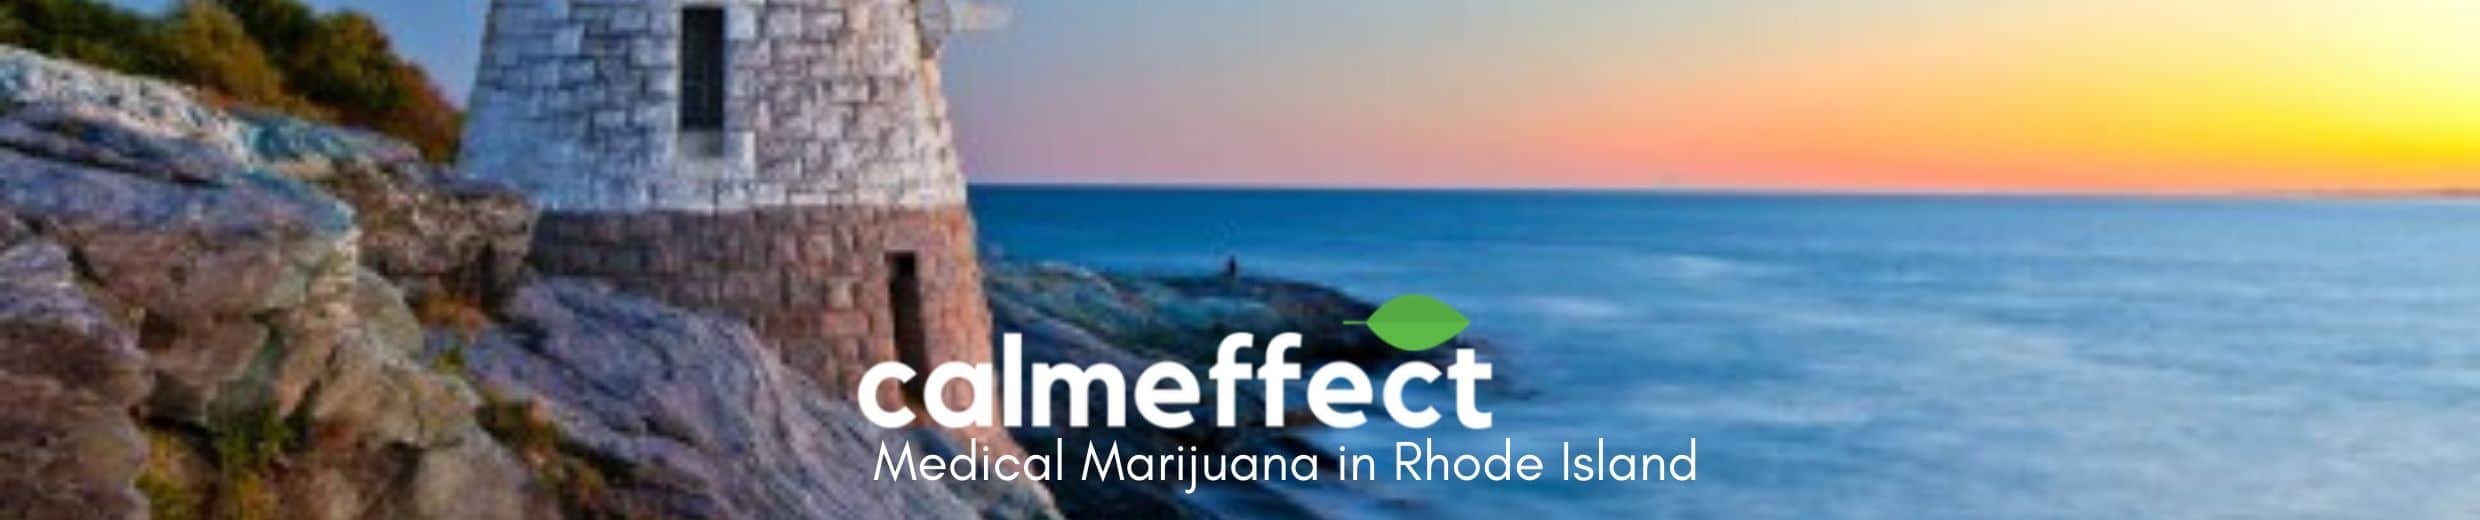 Medical Marijuana in Rhode Island